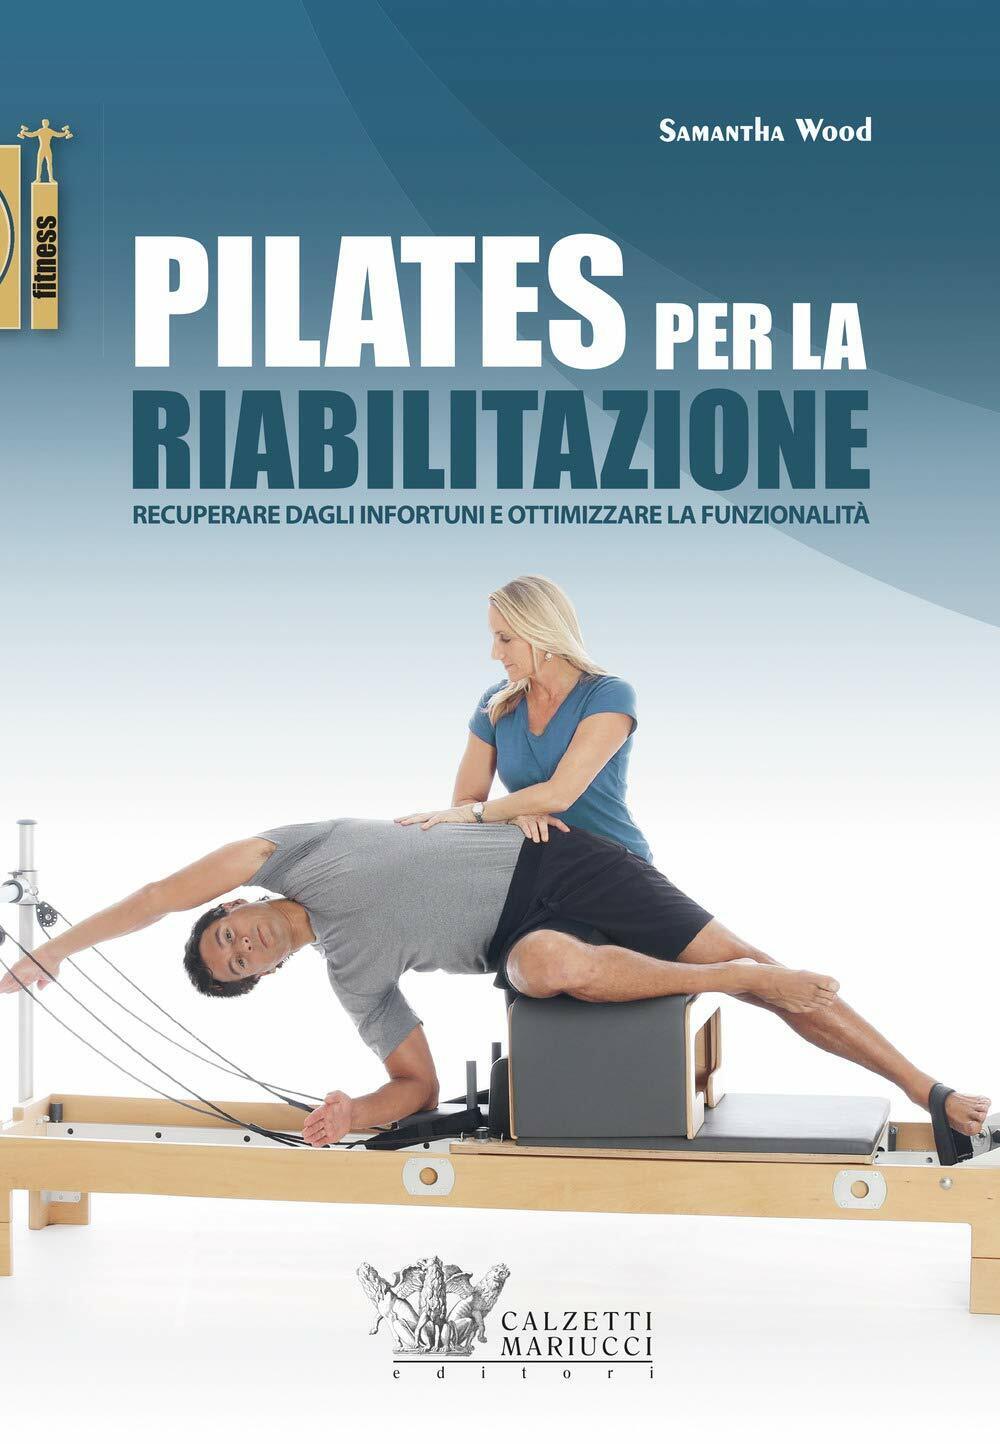 Pilates per la riabilitazione - Samantha Wood - Calzetti Mariucci, 2019